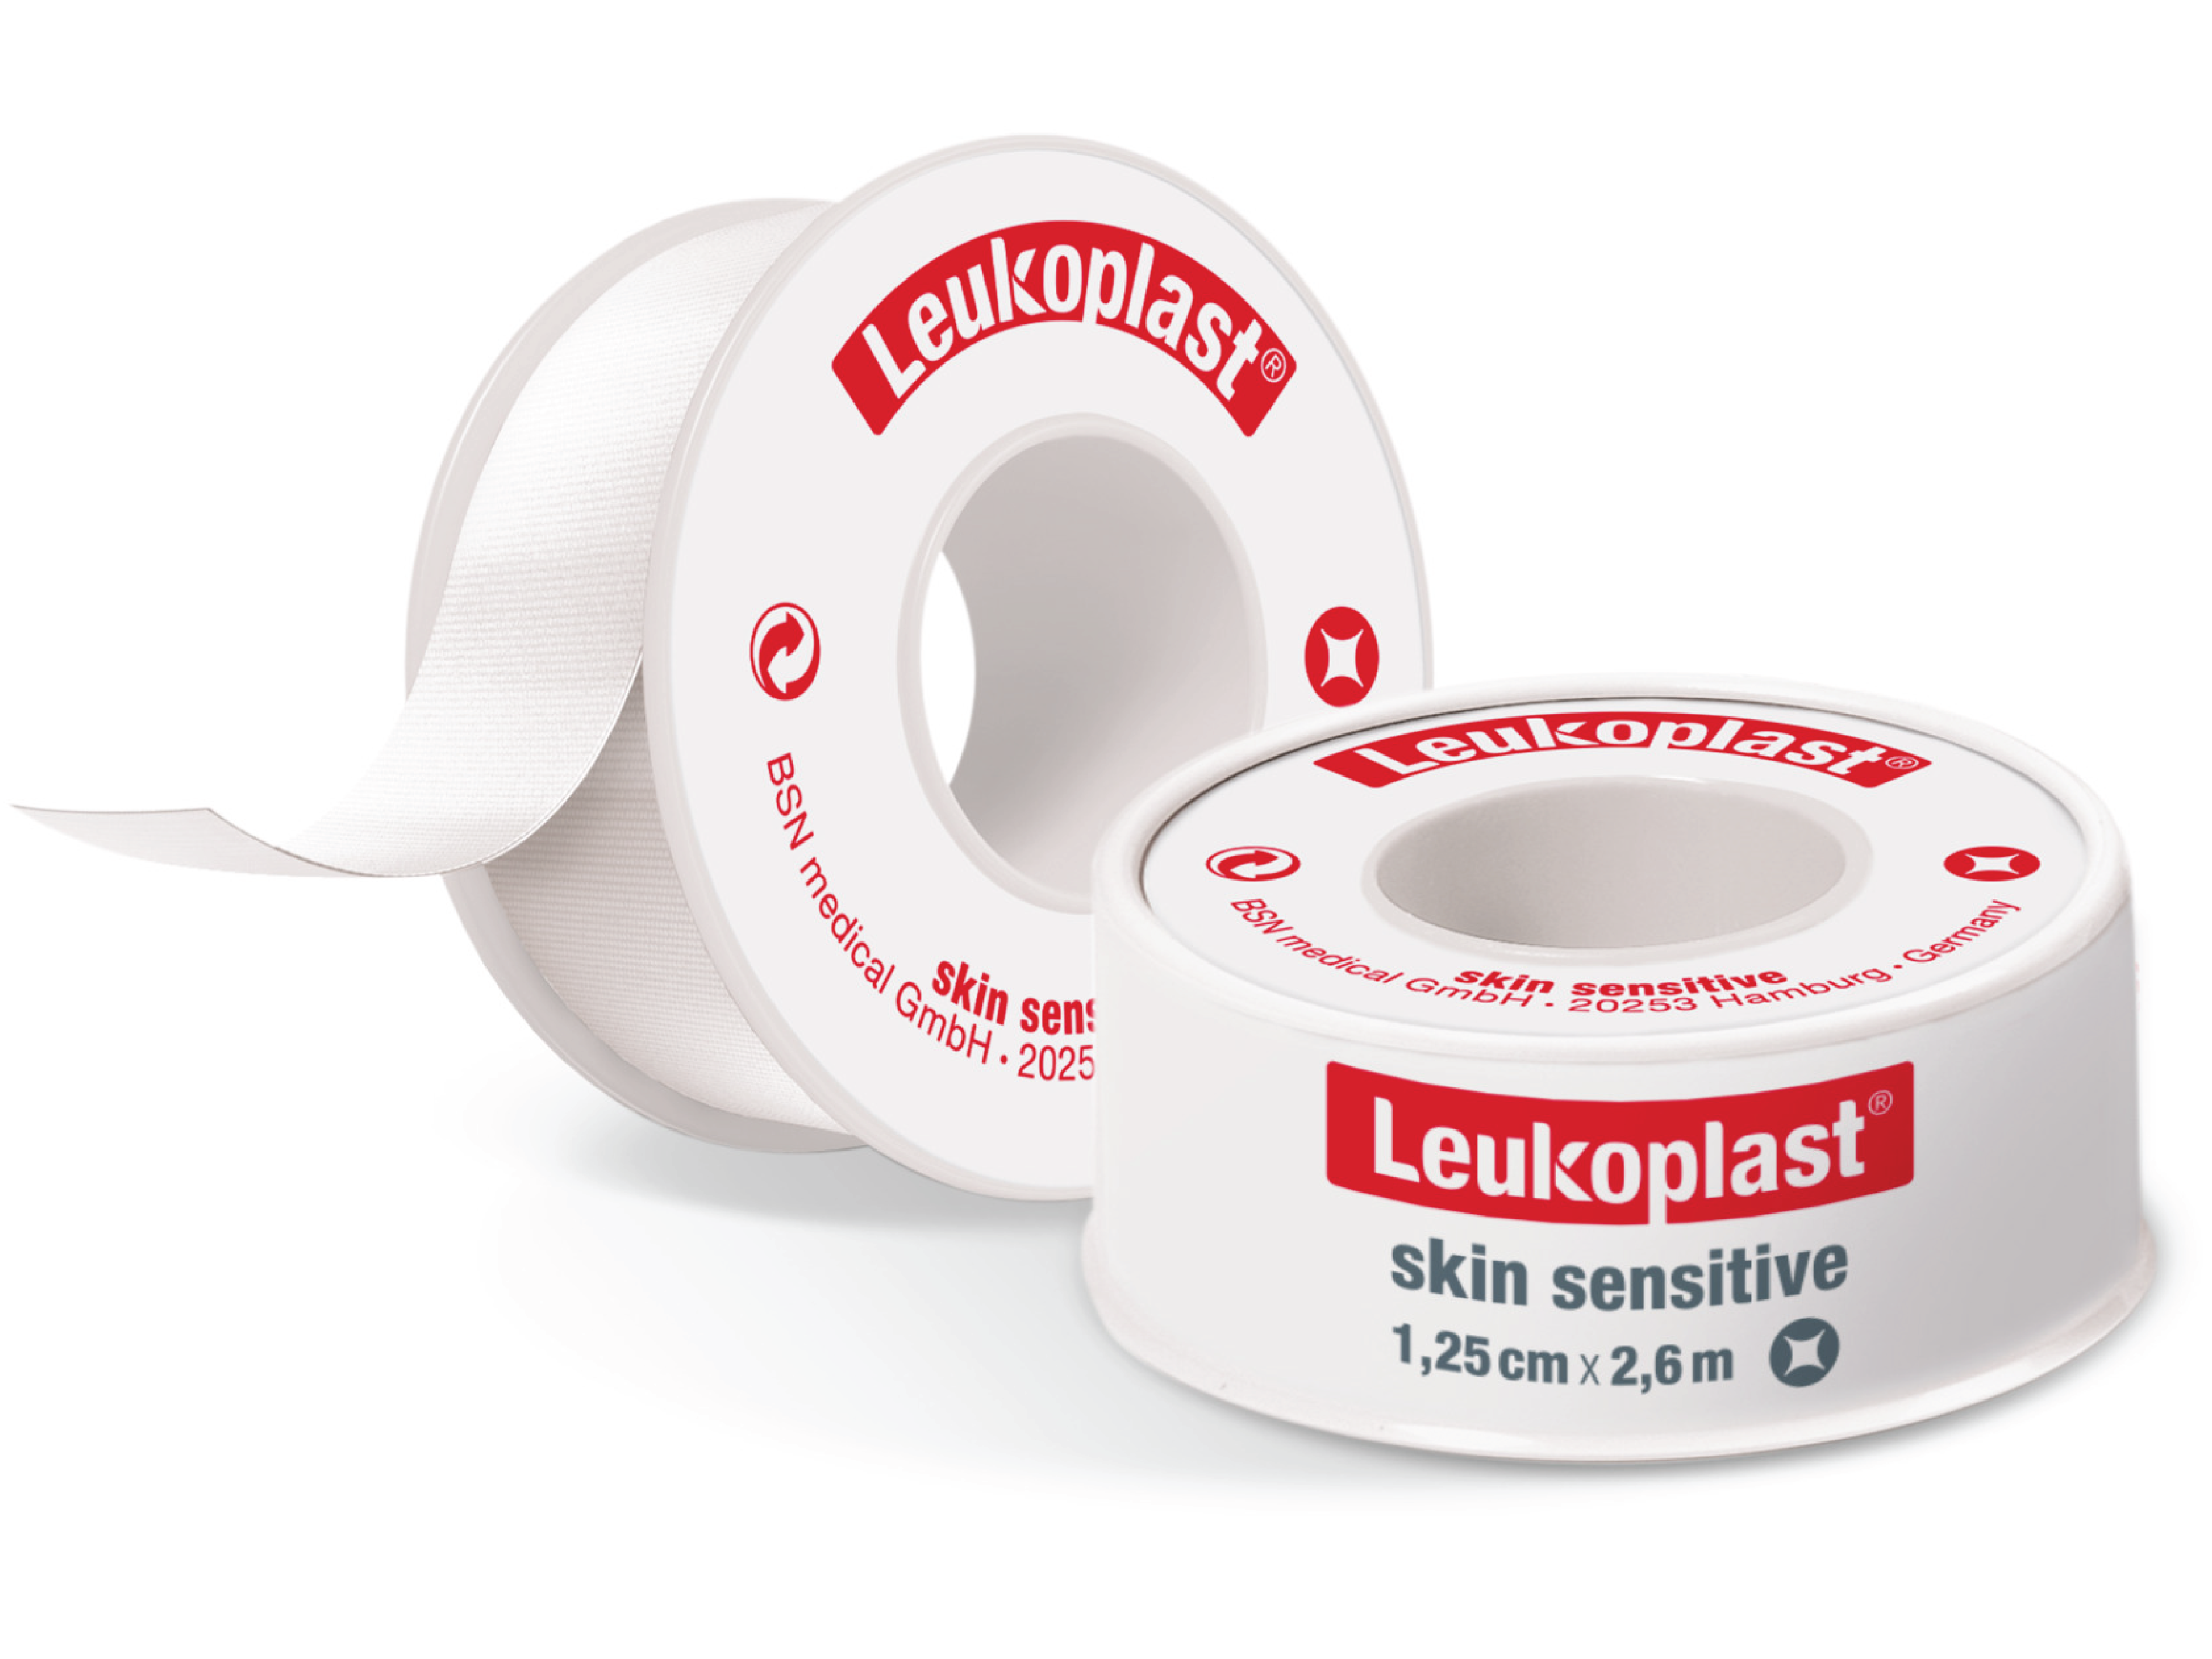 Leukoplast Skin Sensitive Tape, 1,25cmx2,6m